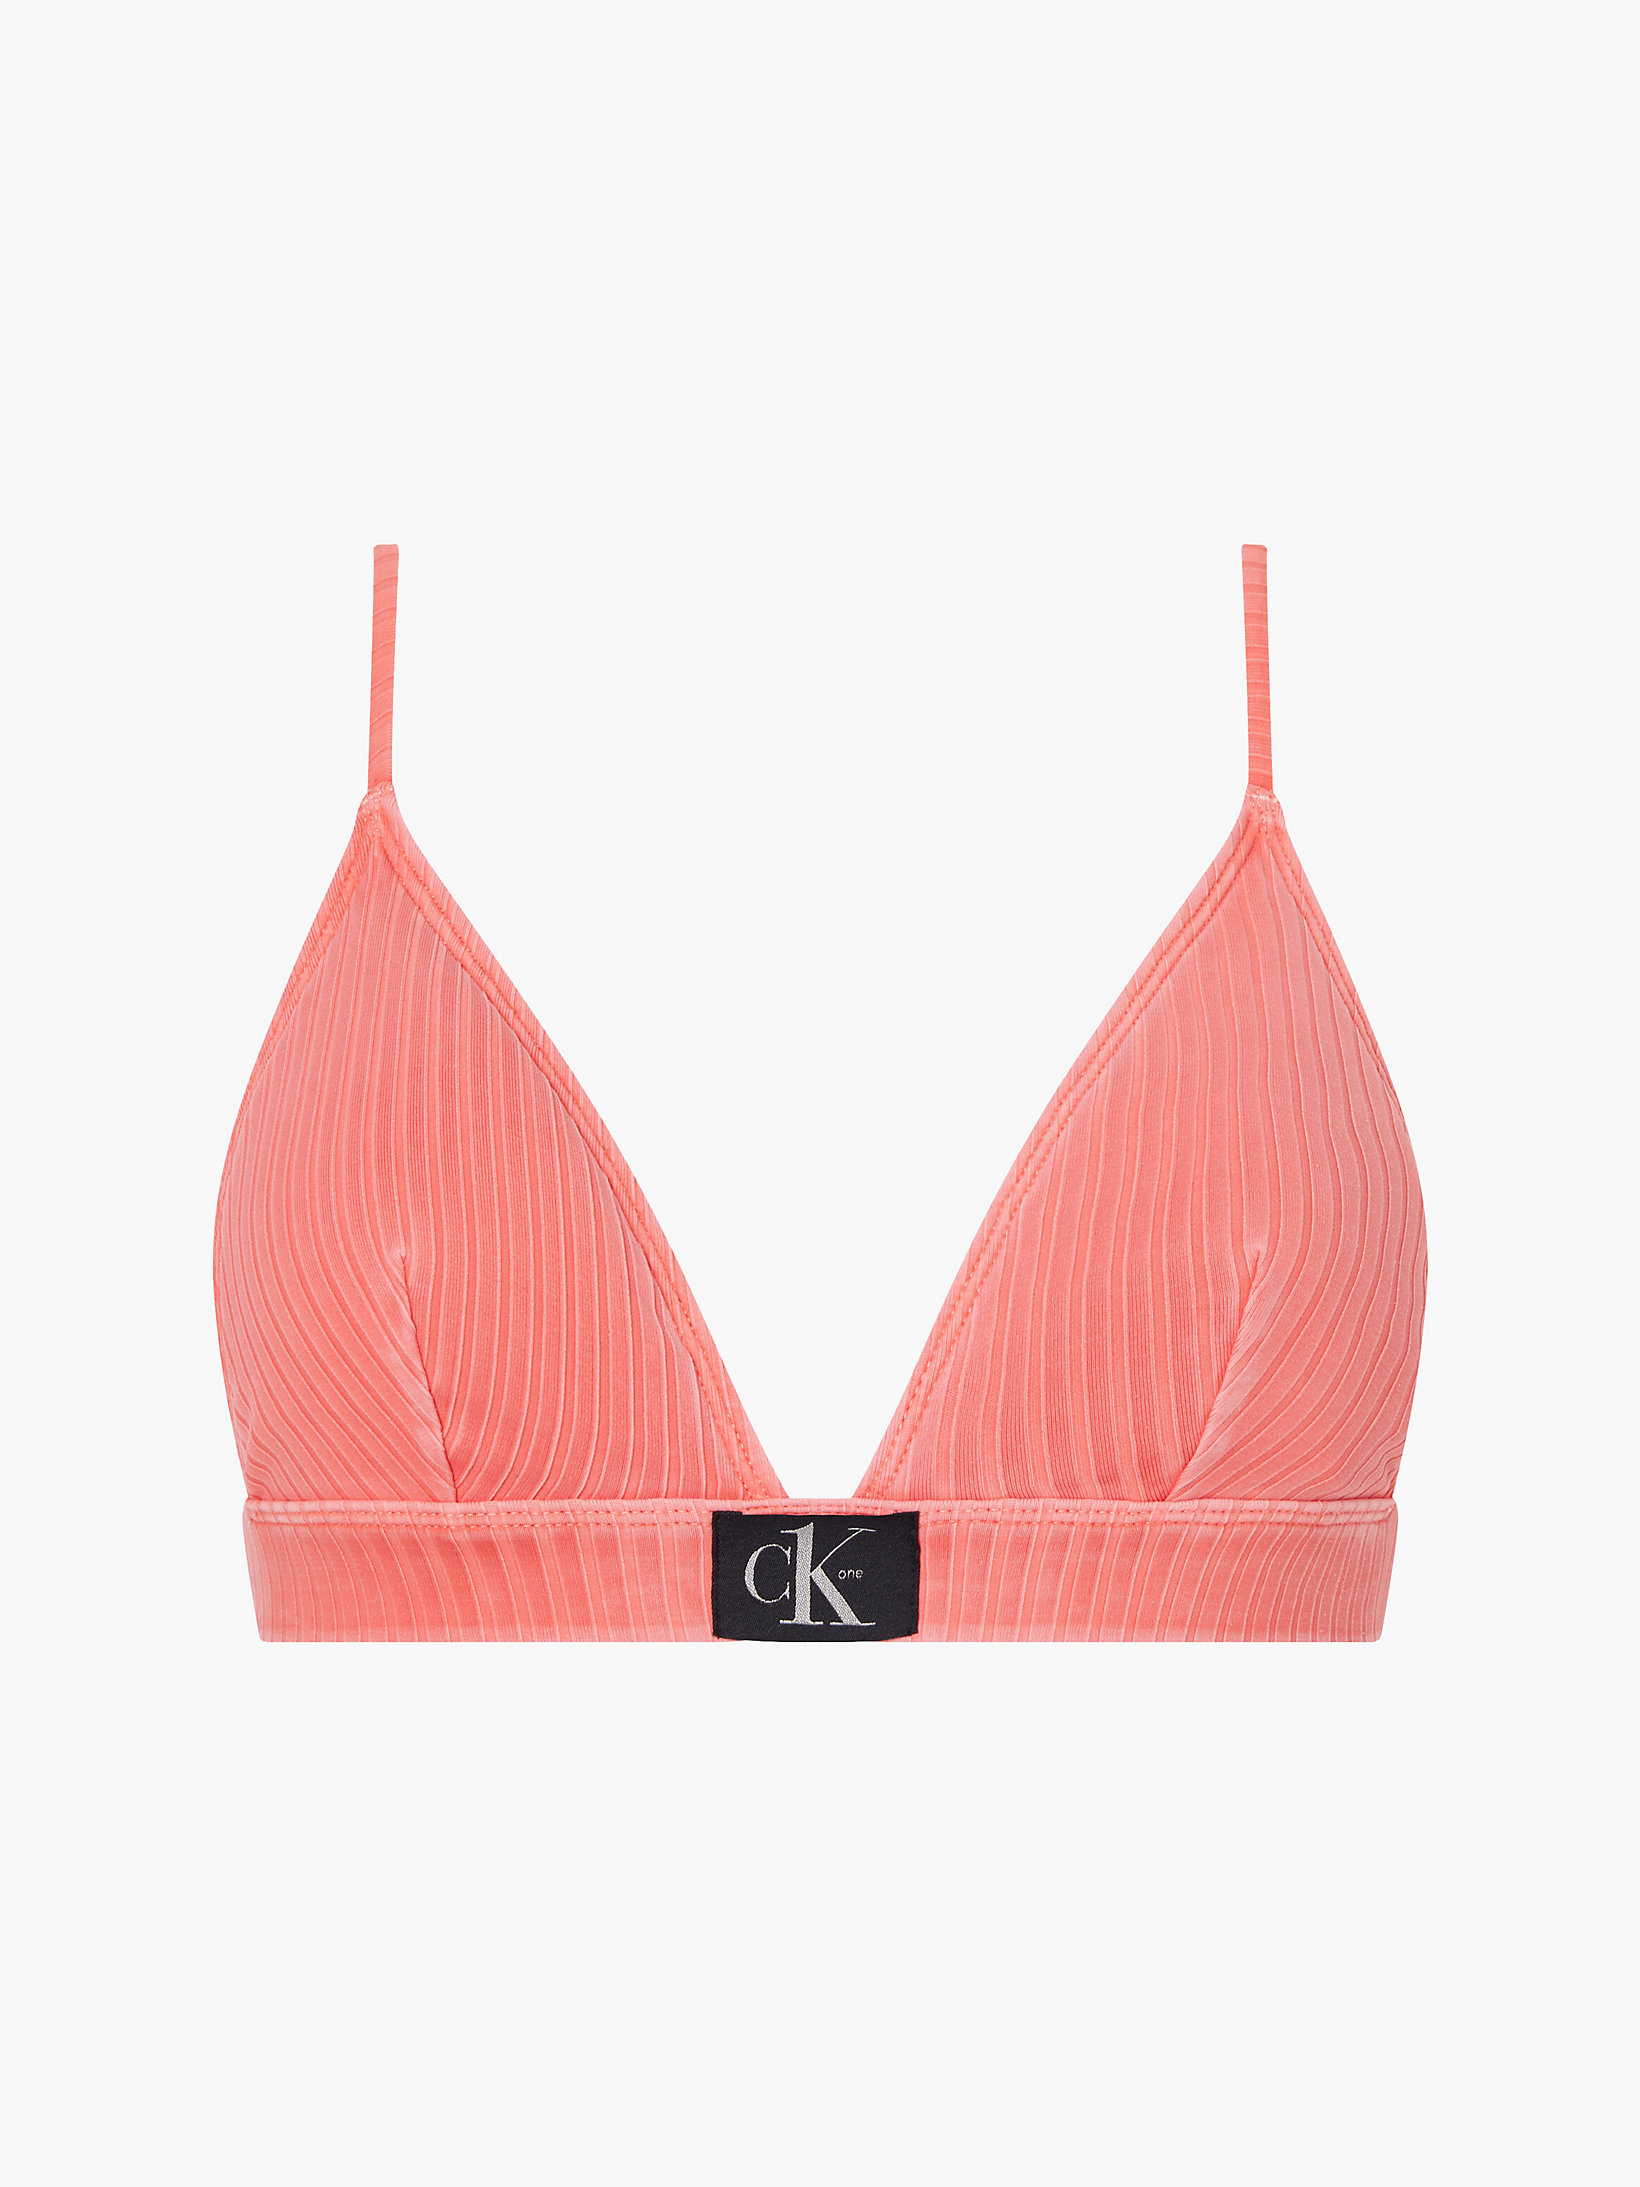 Bright Vermillion Triangle Bikini Top - CK Authentic undefined women Calvin Klein